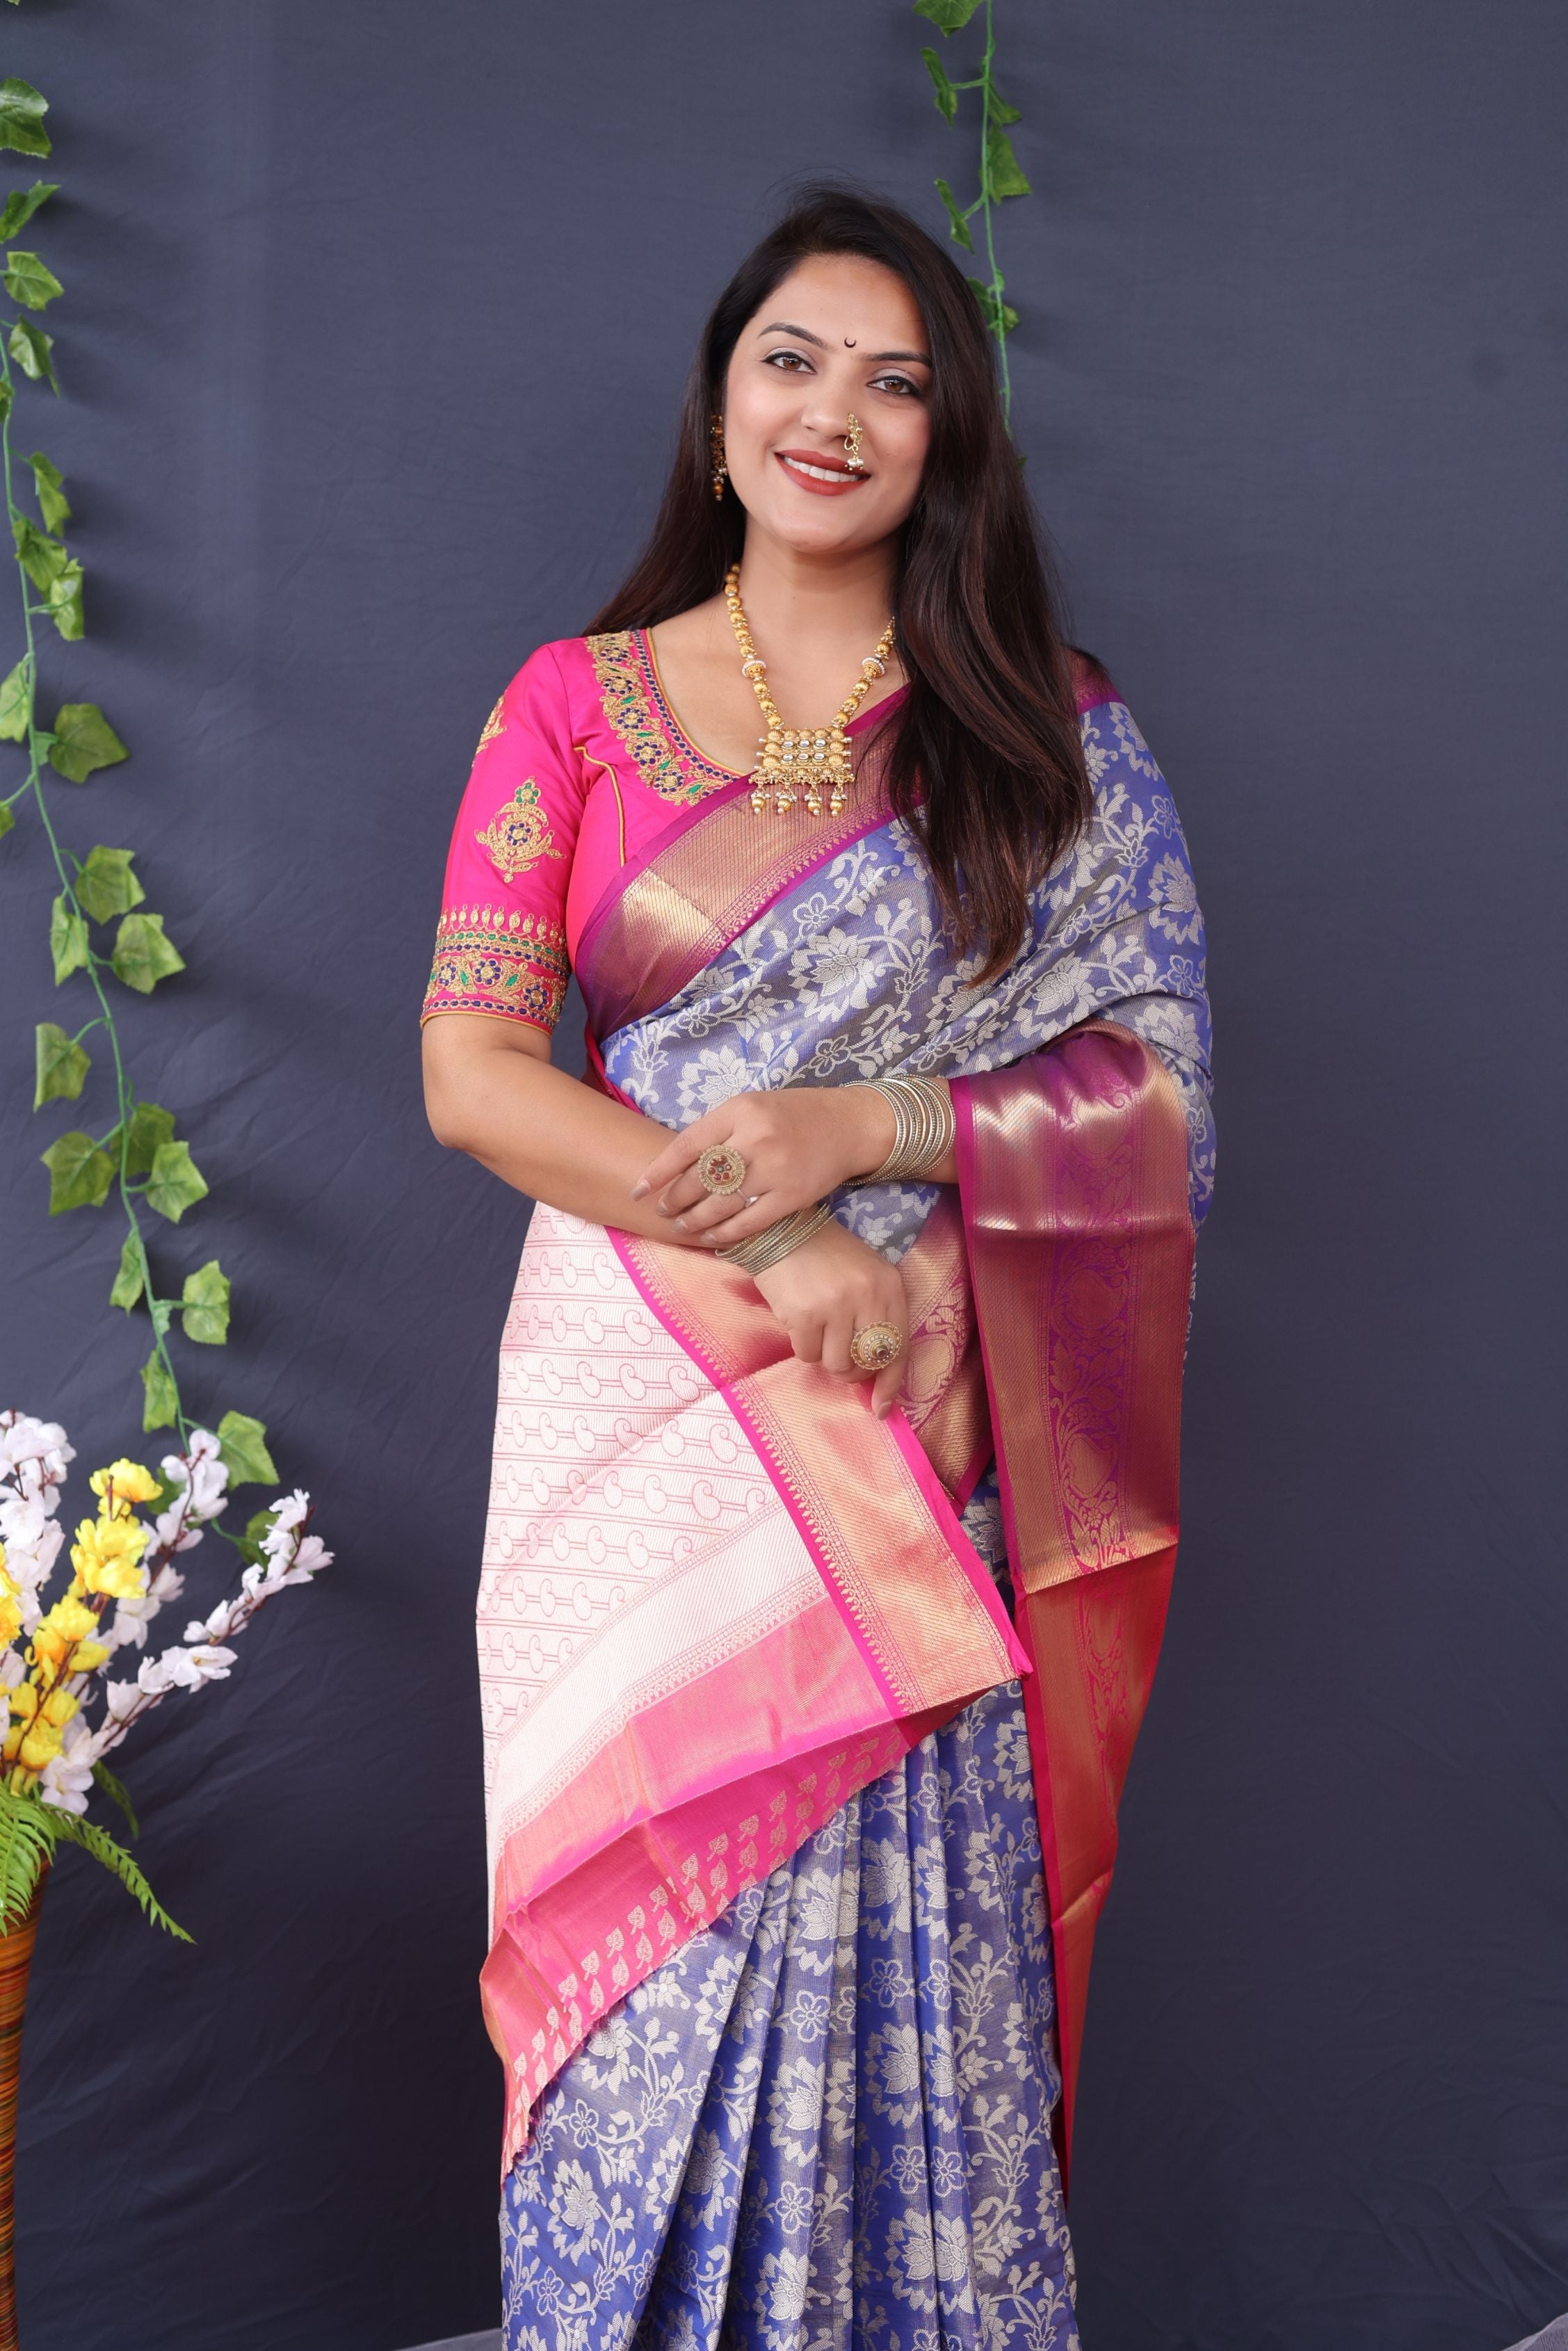 Royal Blue Color Tissue Kanchipuram Saree Gorgeous Flower Design Body and Pallu